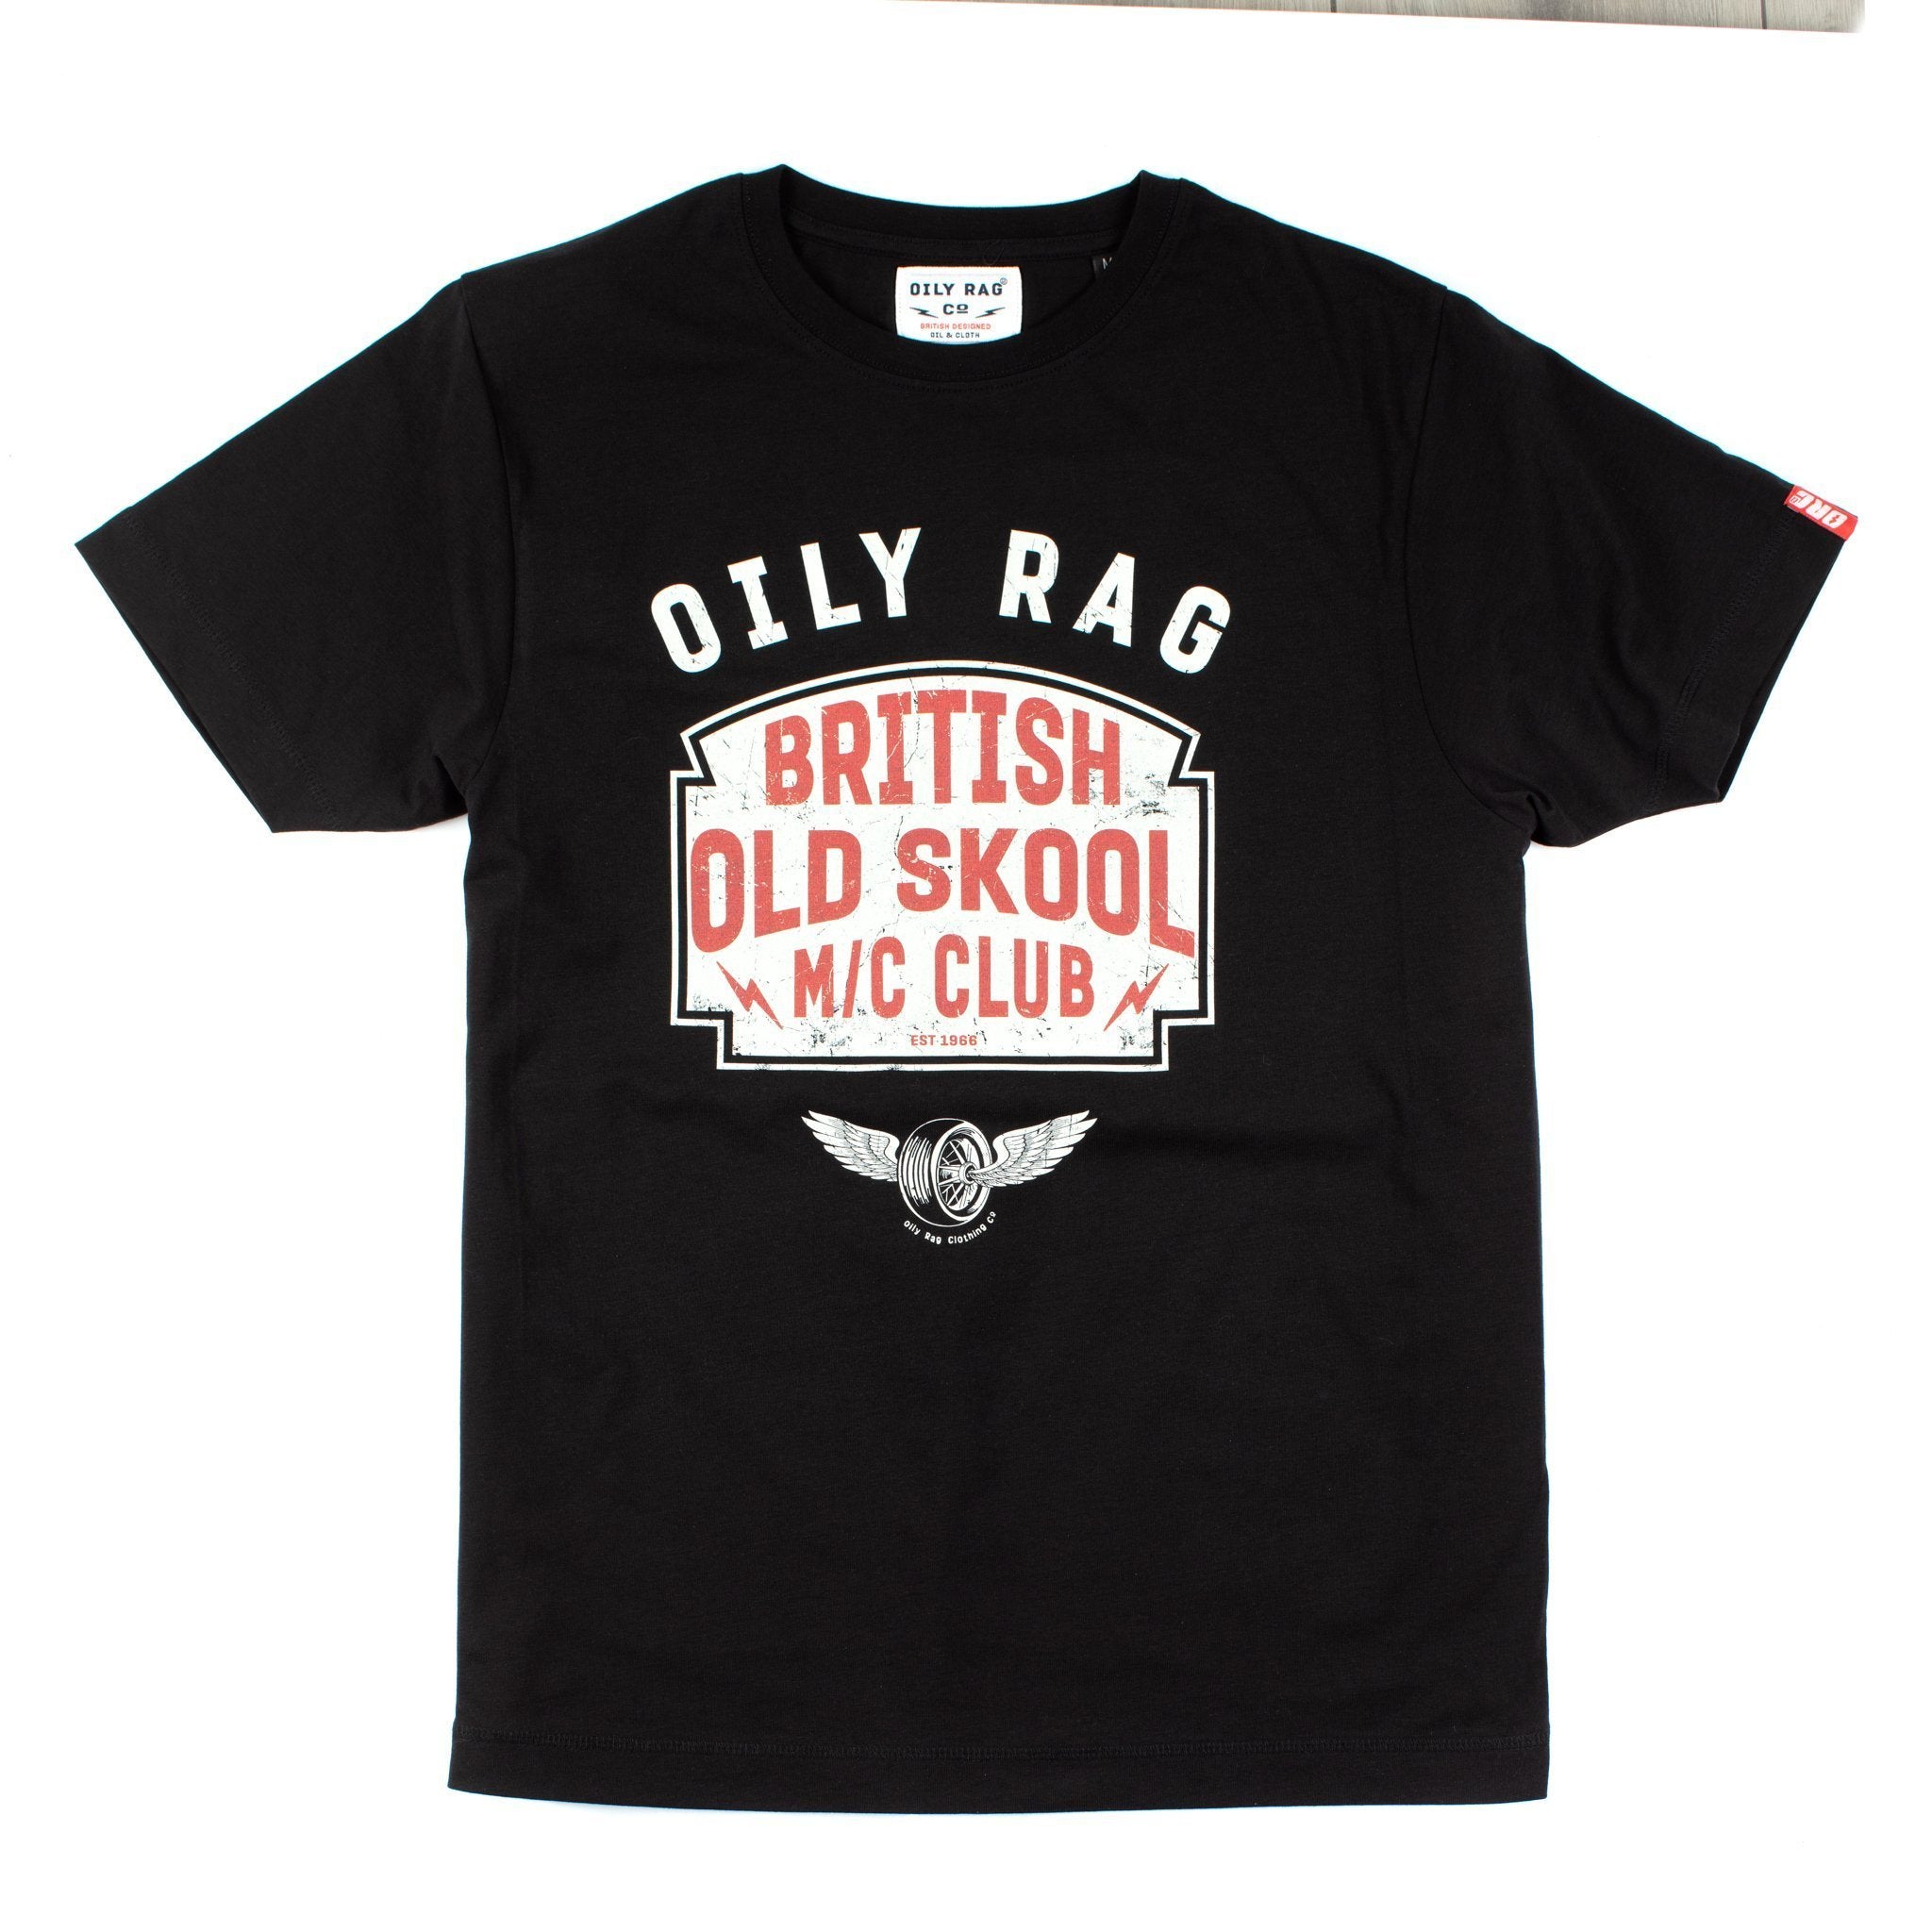 Oily Rag Clothing Black Label Old Skool 